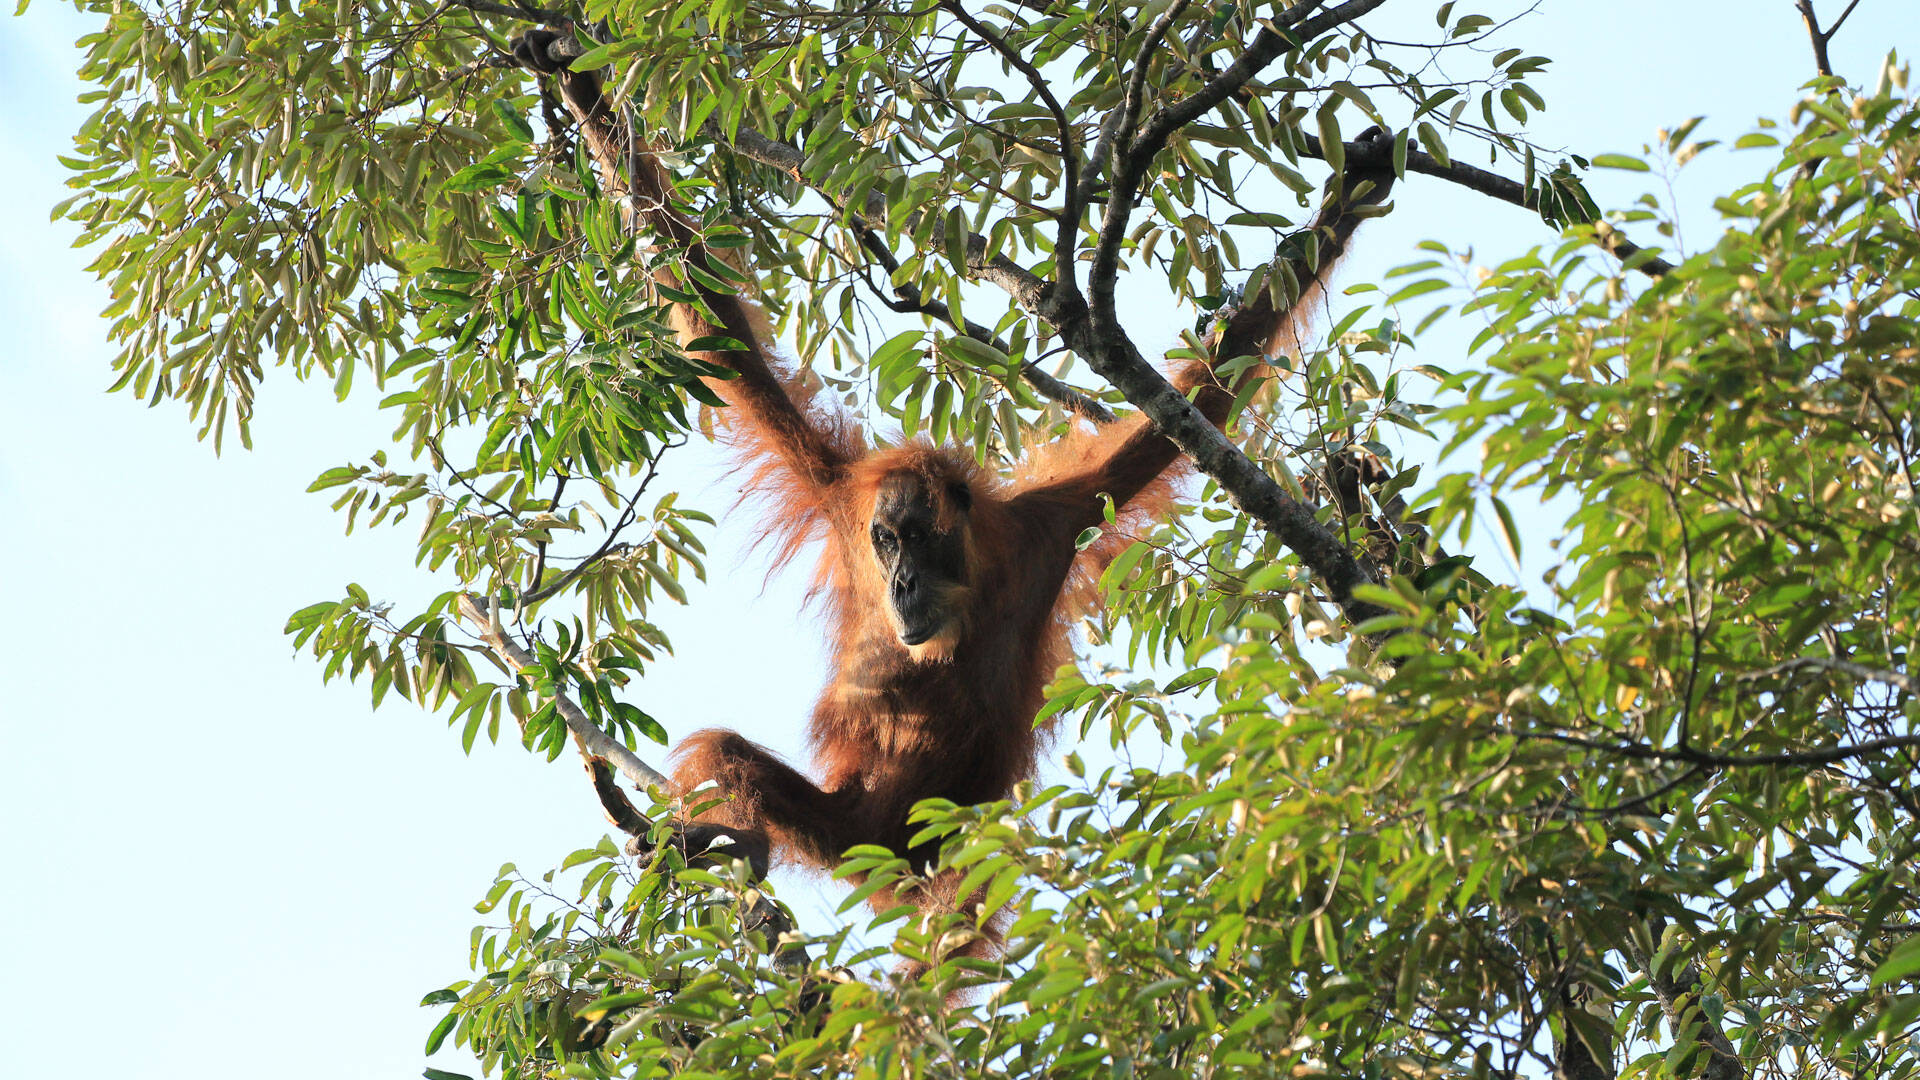 https://cdn.aucklandunlimited.com/zoo/assets/media/wild-orangutan-sumatra-gallery-2.jpg